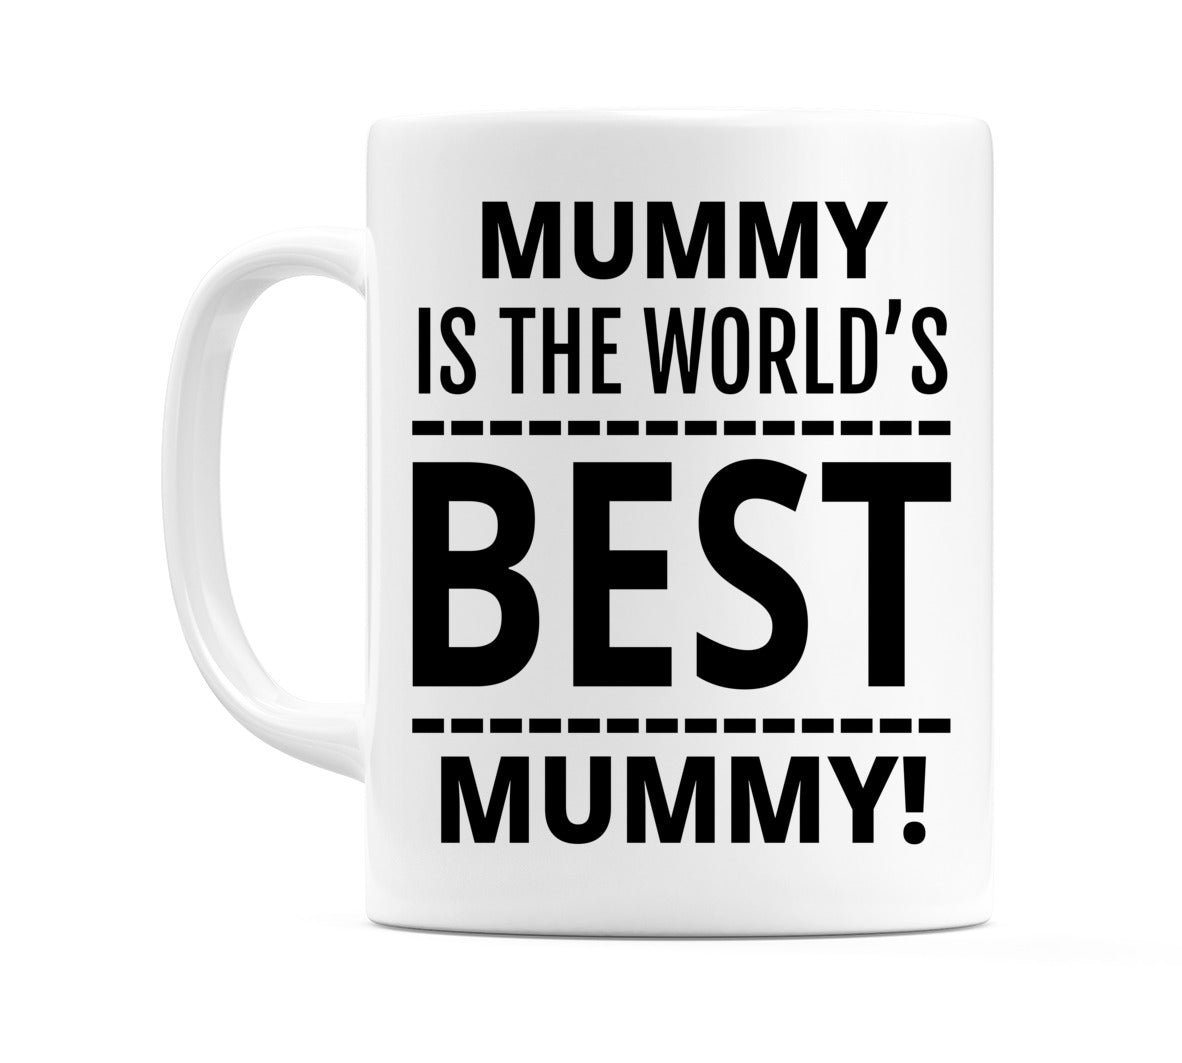 Mummy is The World's BEST Mummy! Mug Mug